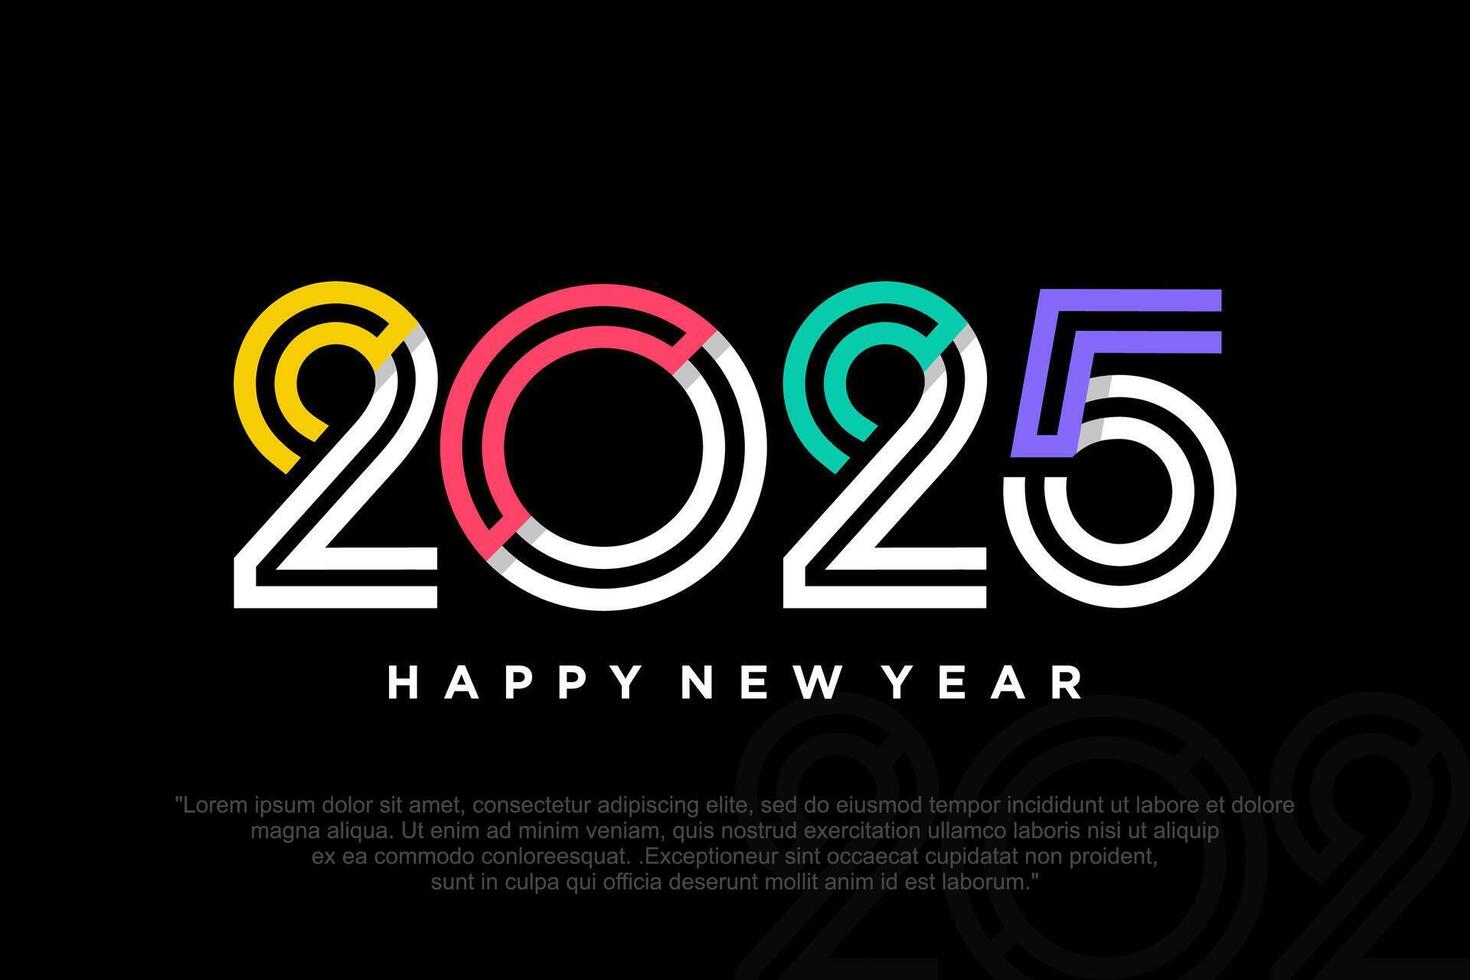 Happy new year 2025 design,2025 logo text design. new year celebration concept . Vector illustration